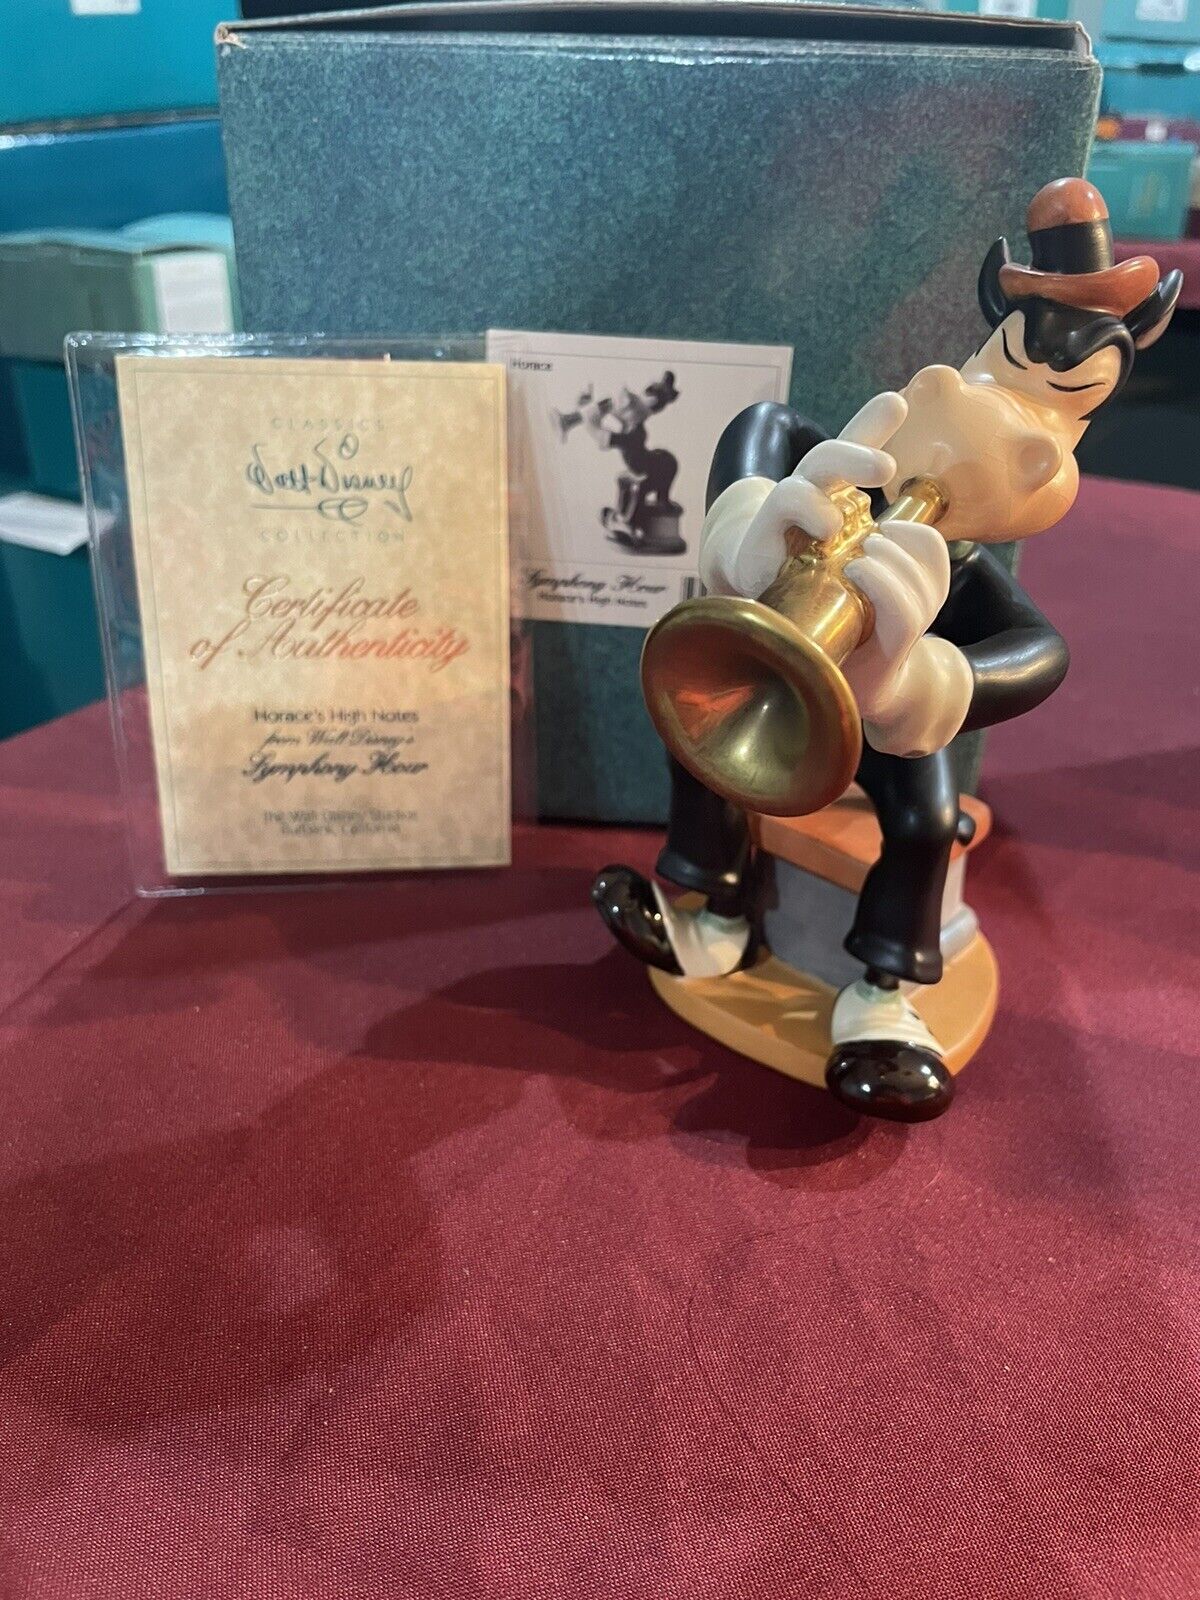 WDCC - Disney, Symphony Hour Horace’s High Notes Figurine - Orig. Box And COA